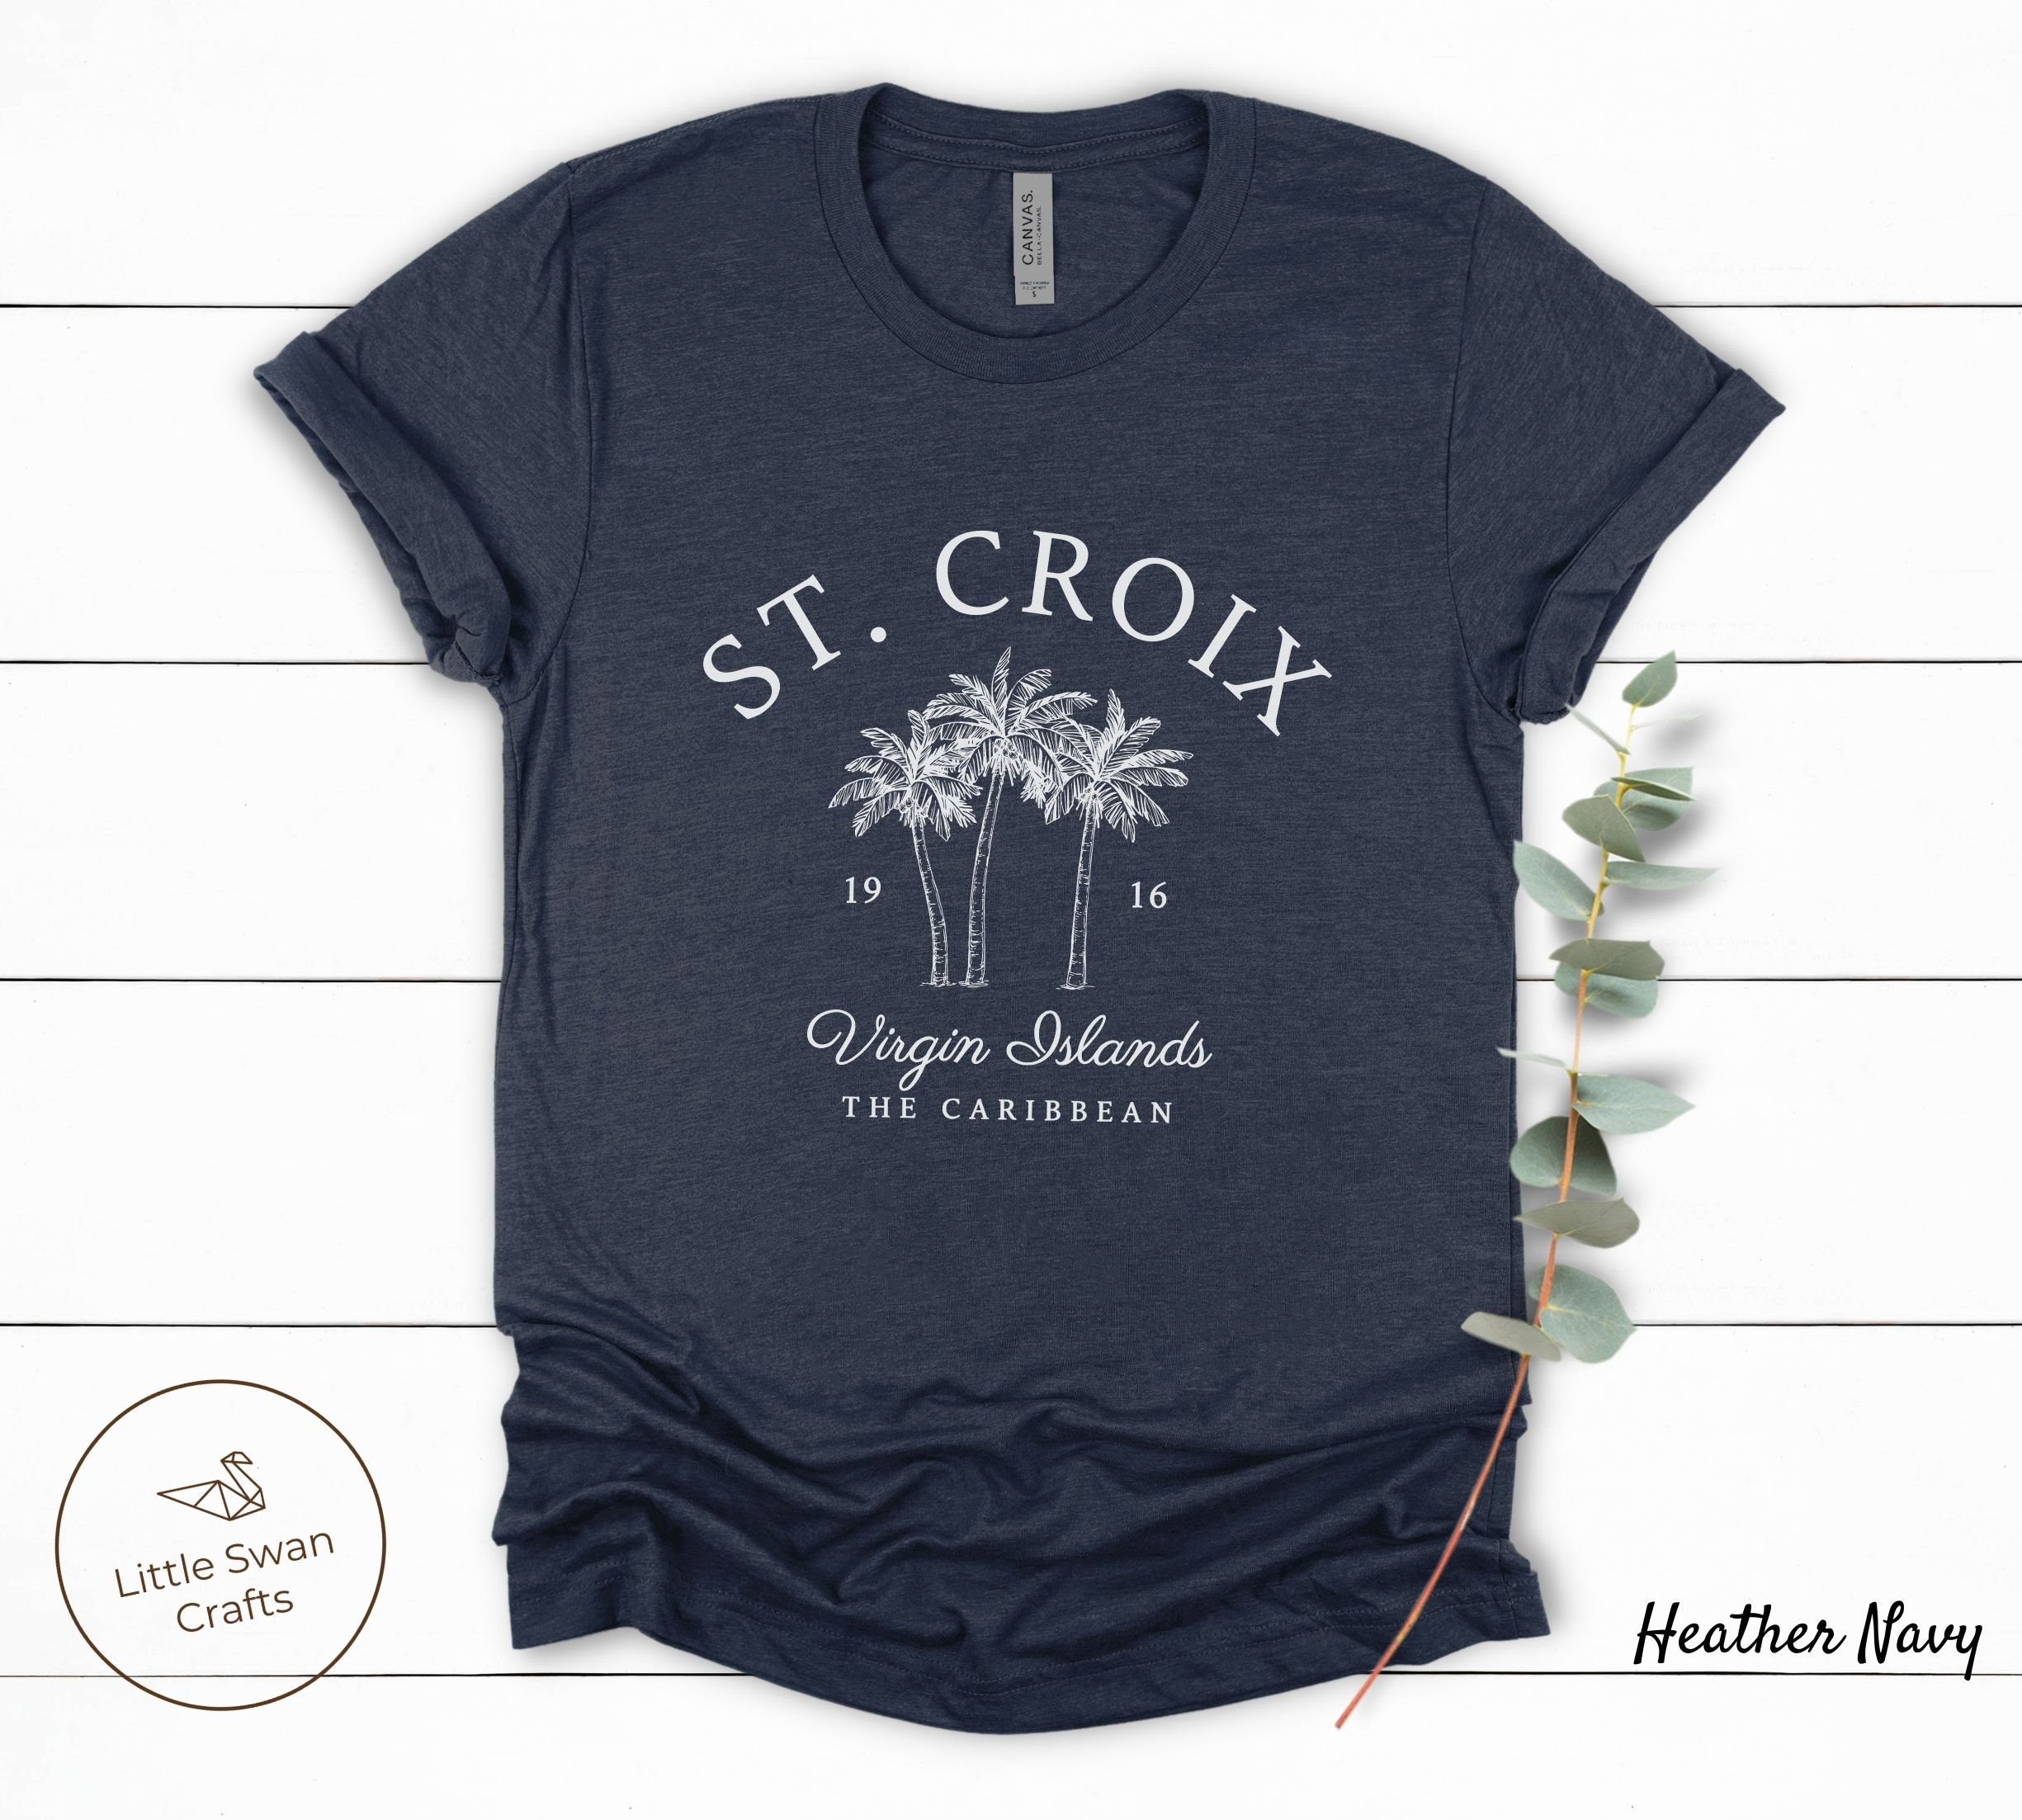 St. Croix Shirt, US Virgin Islands, Saint Croix Caribbean Sea T-Shirt, unisex